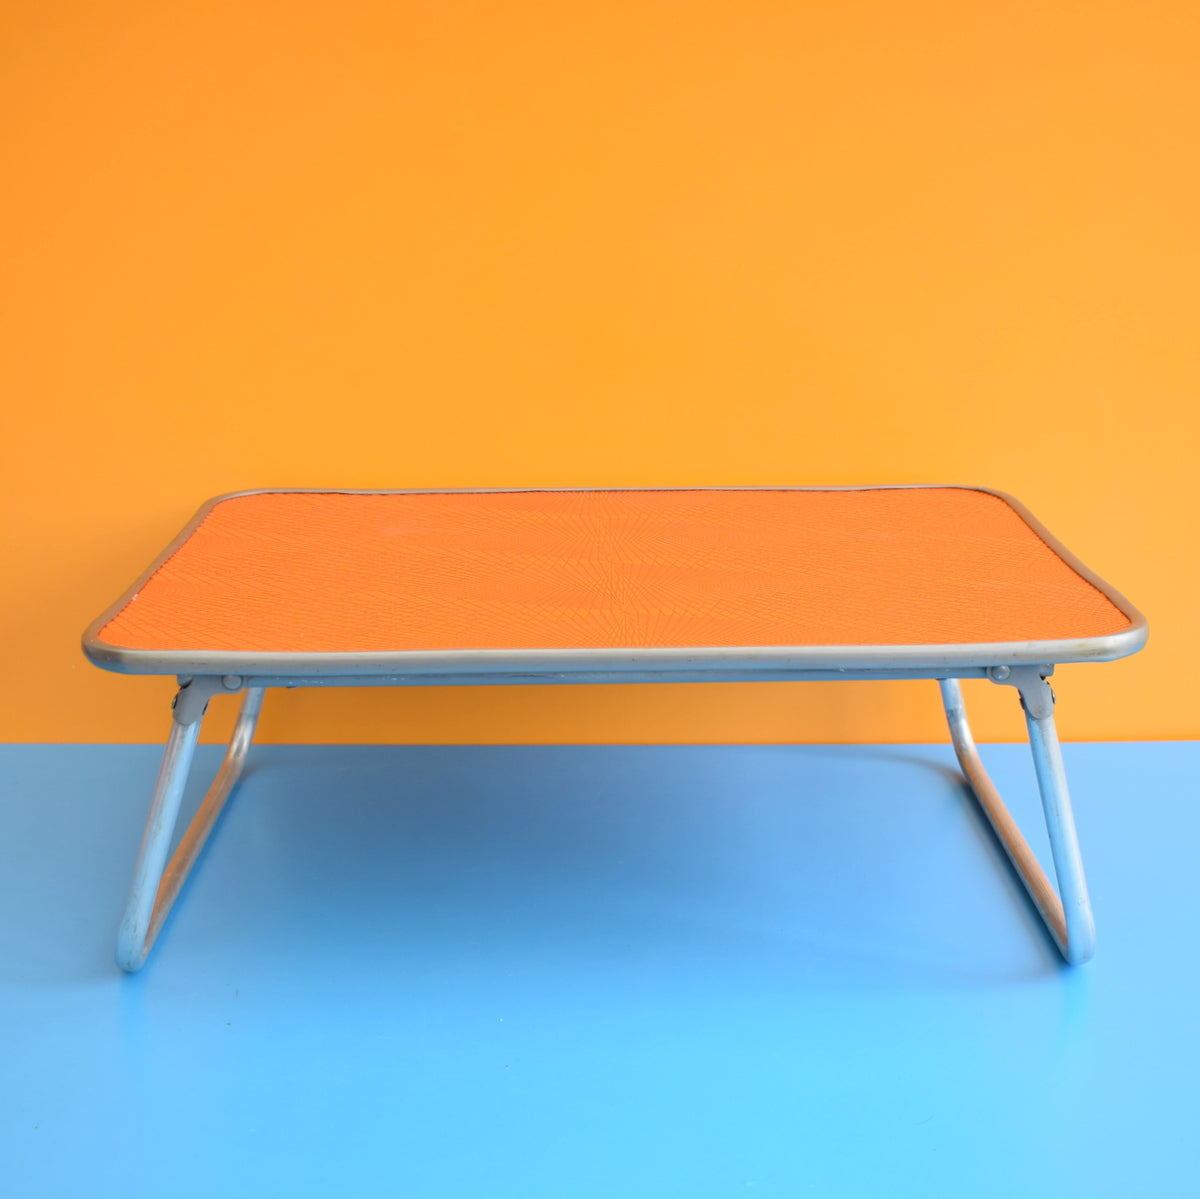 Vintage 1960s Folding Low Garden / Lap / Craft Table - Orange